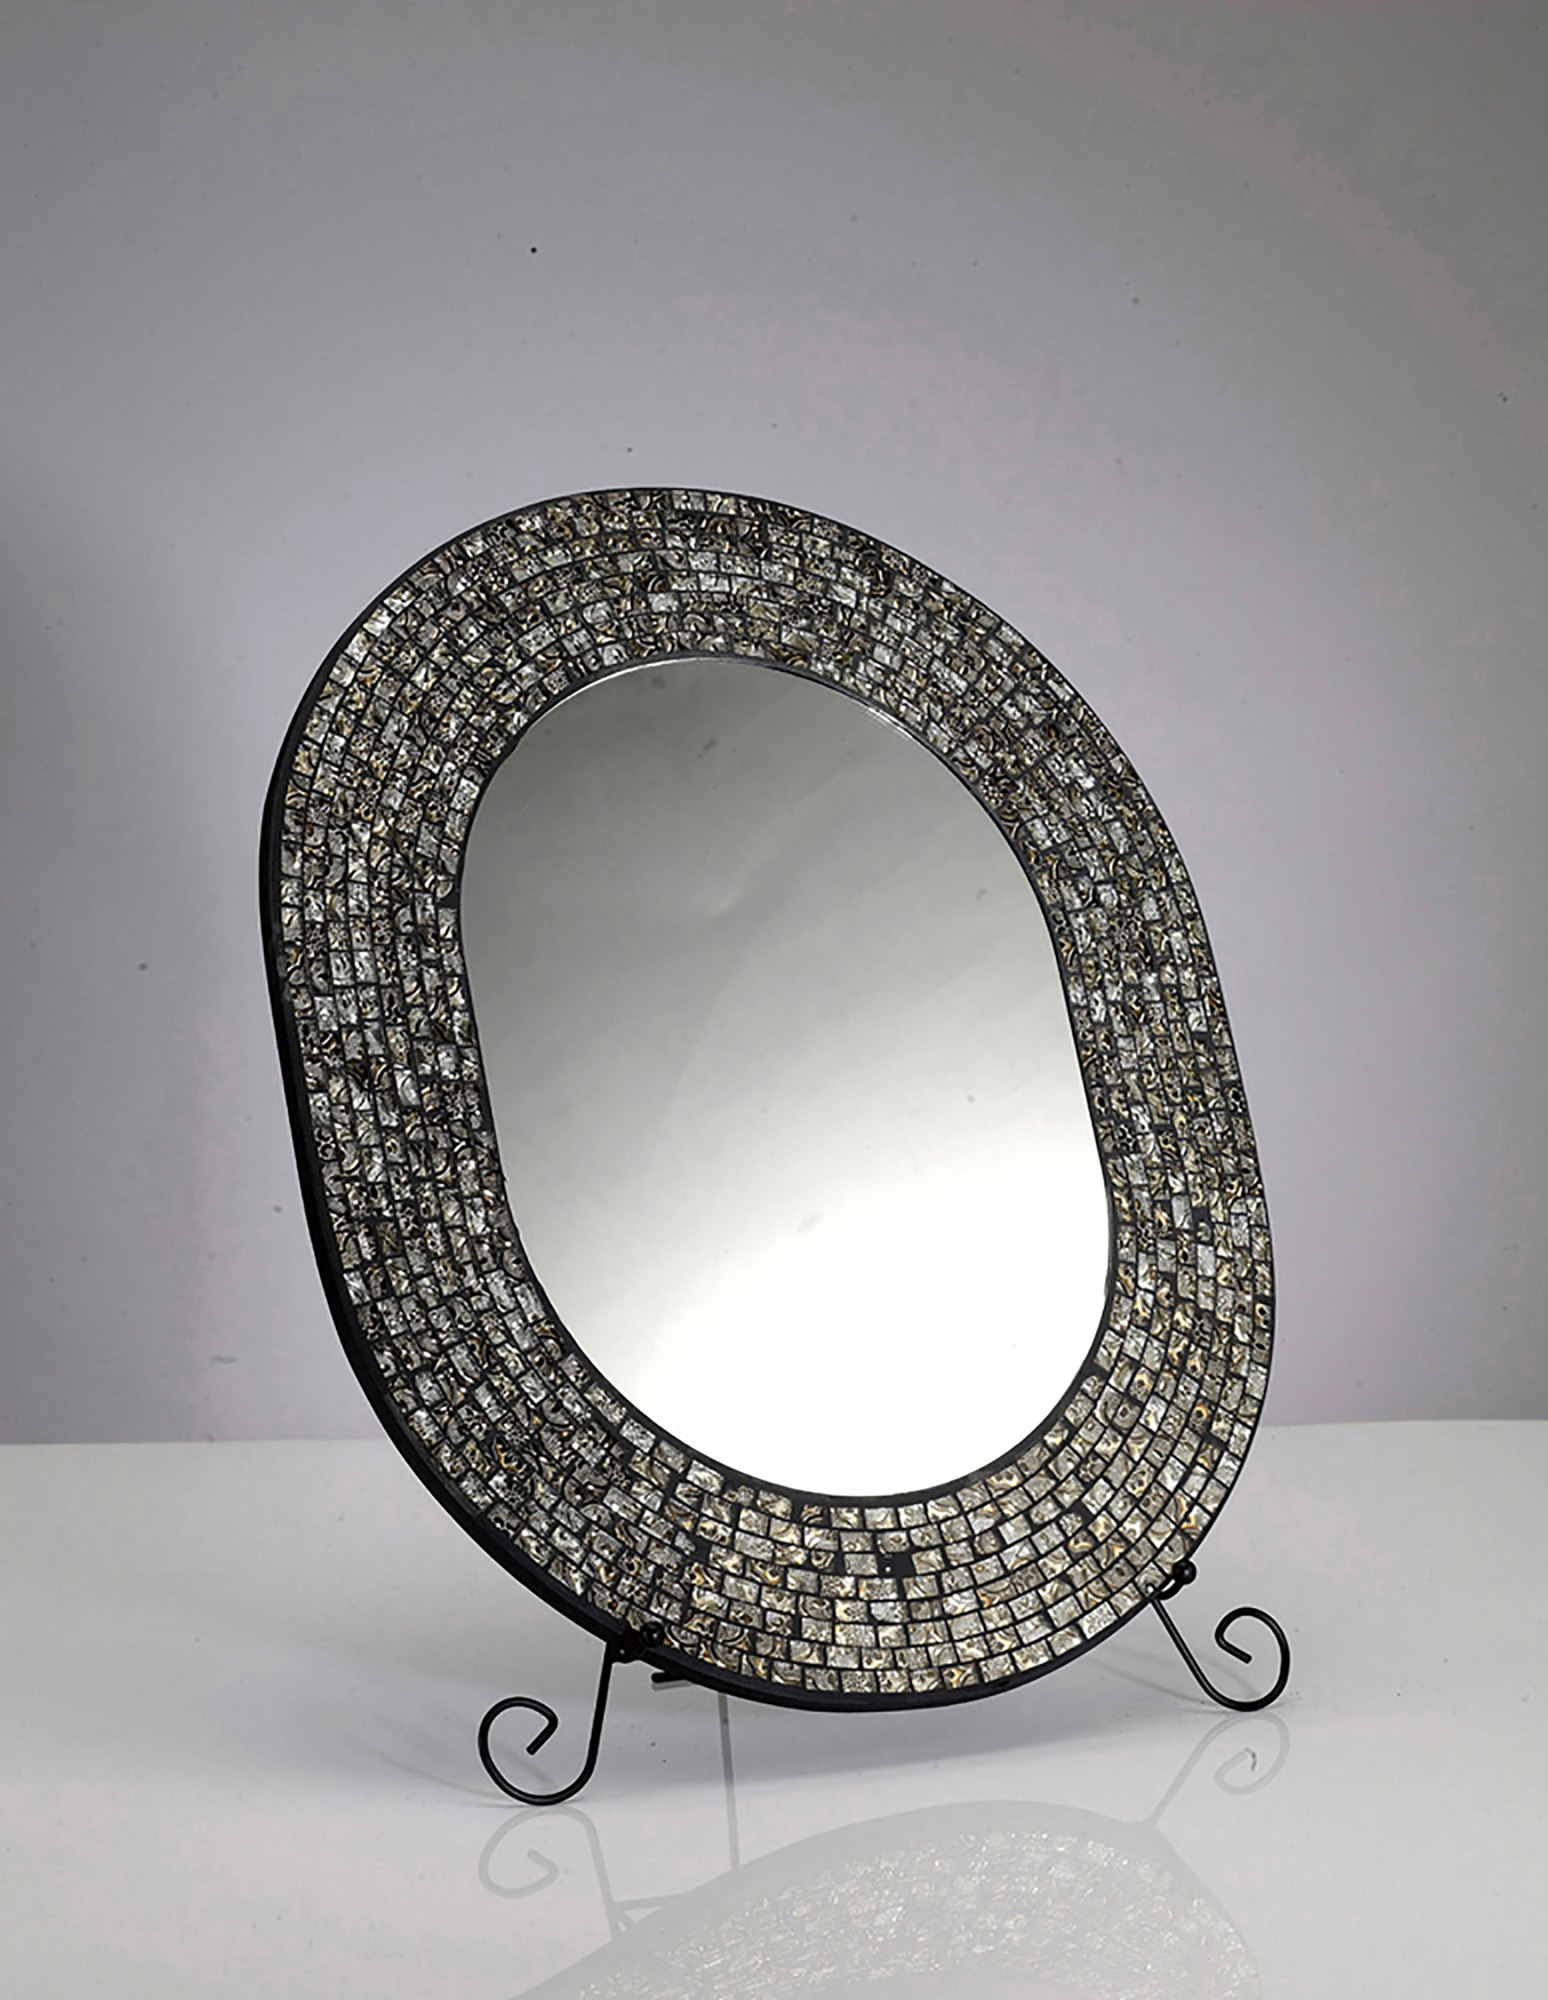 Celeste Mosaic Art Glassware Diyas Home Mirror